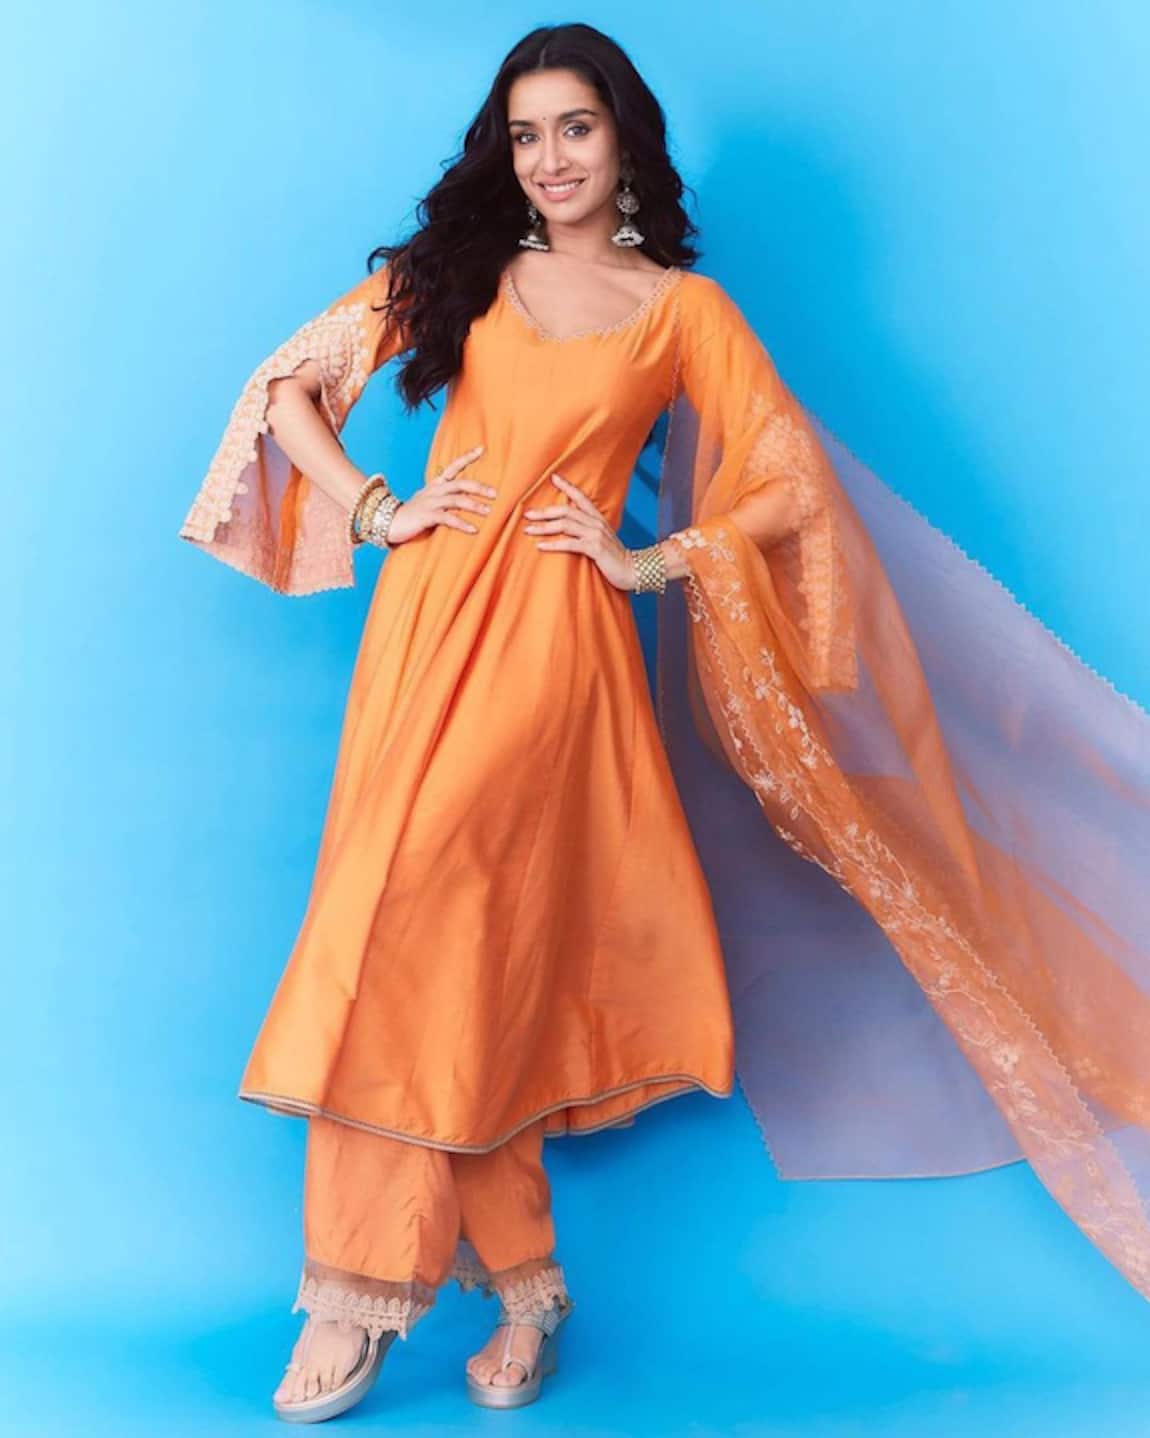 CELEBRITY PICS: Shraddha Kapoor Hot in Golden Dress